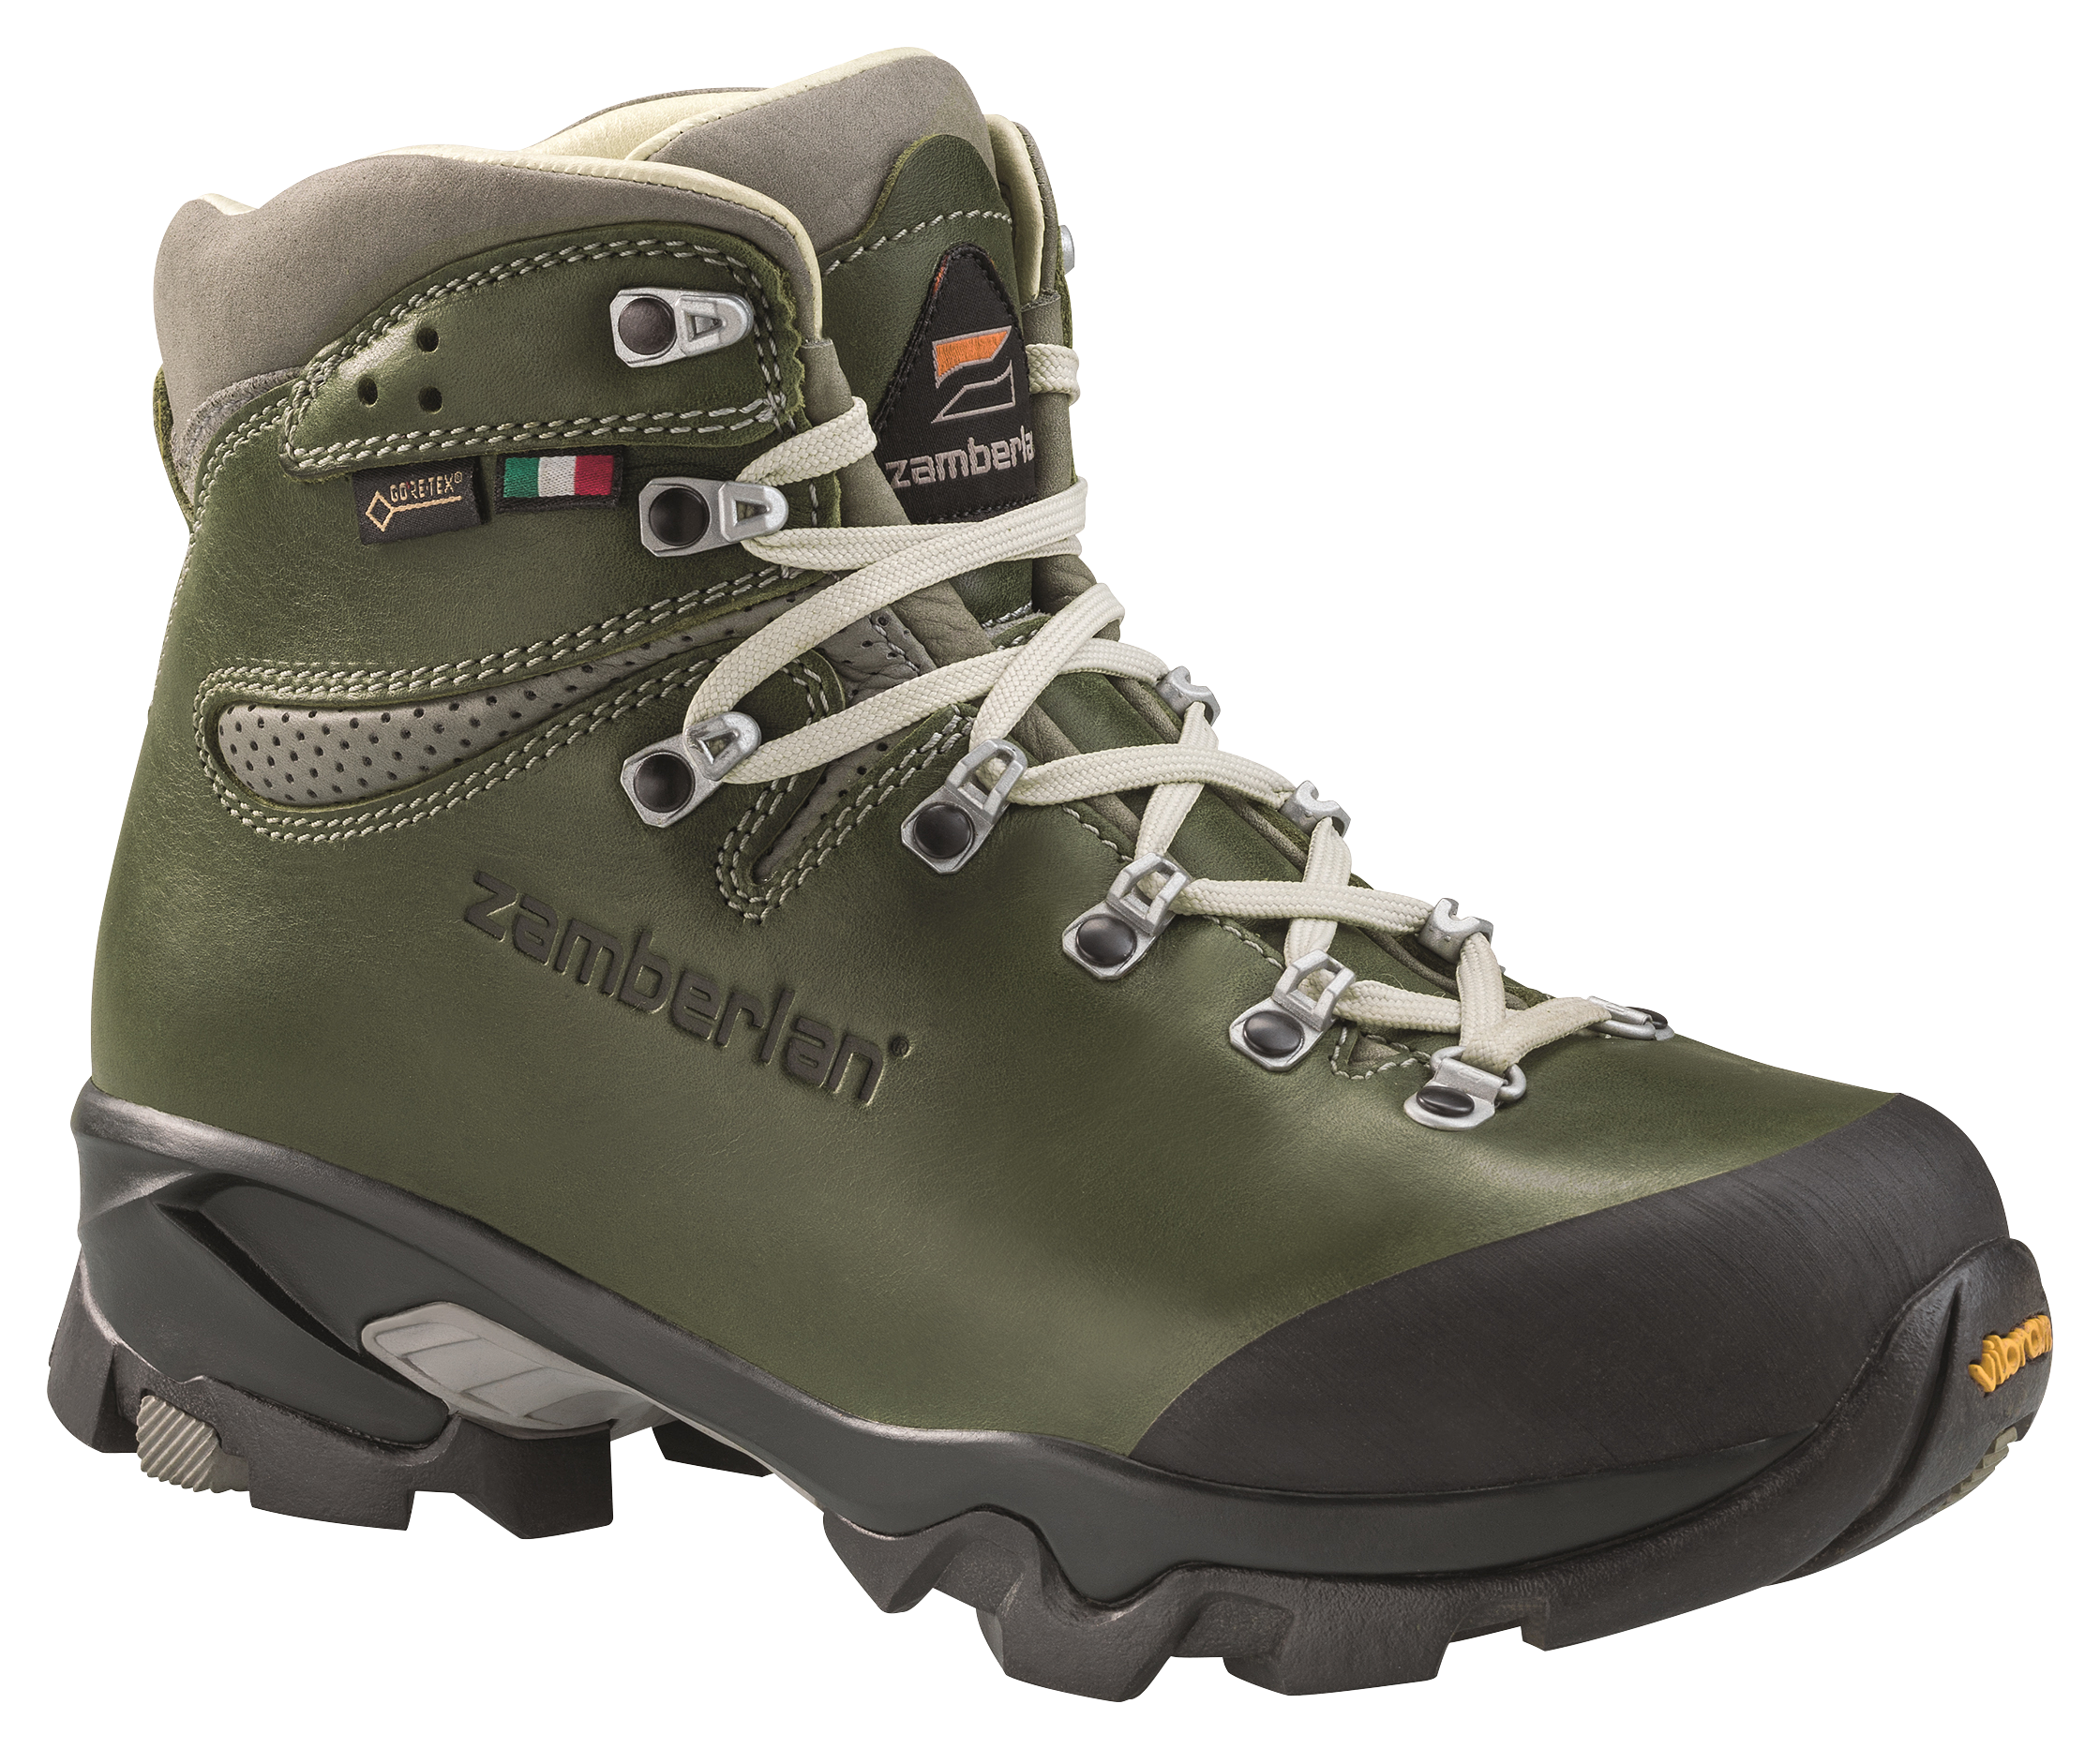 Zamberlan 1996 Vioz Lux GTX RR Waterproof Hiking Boots for Ladies - Waxed Green - 9M